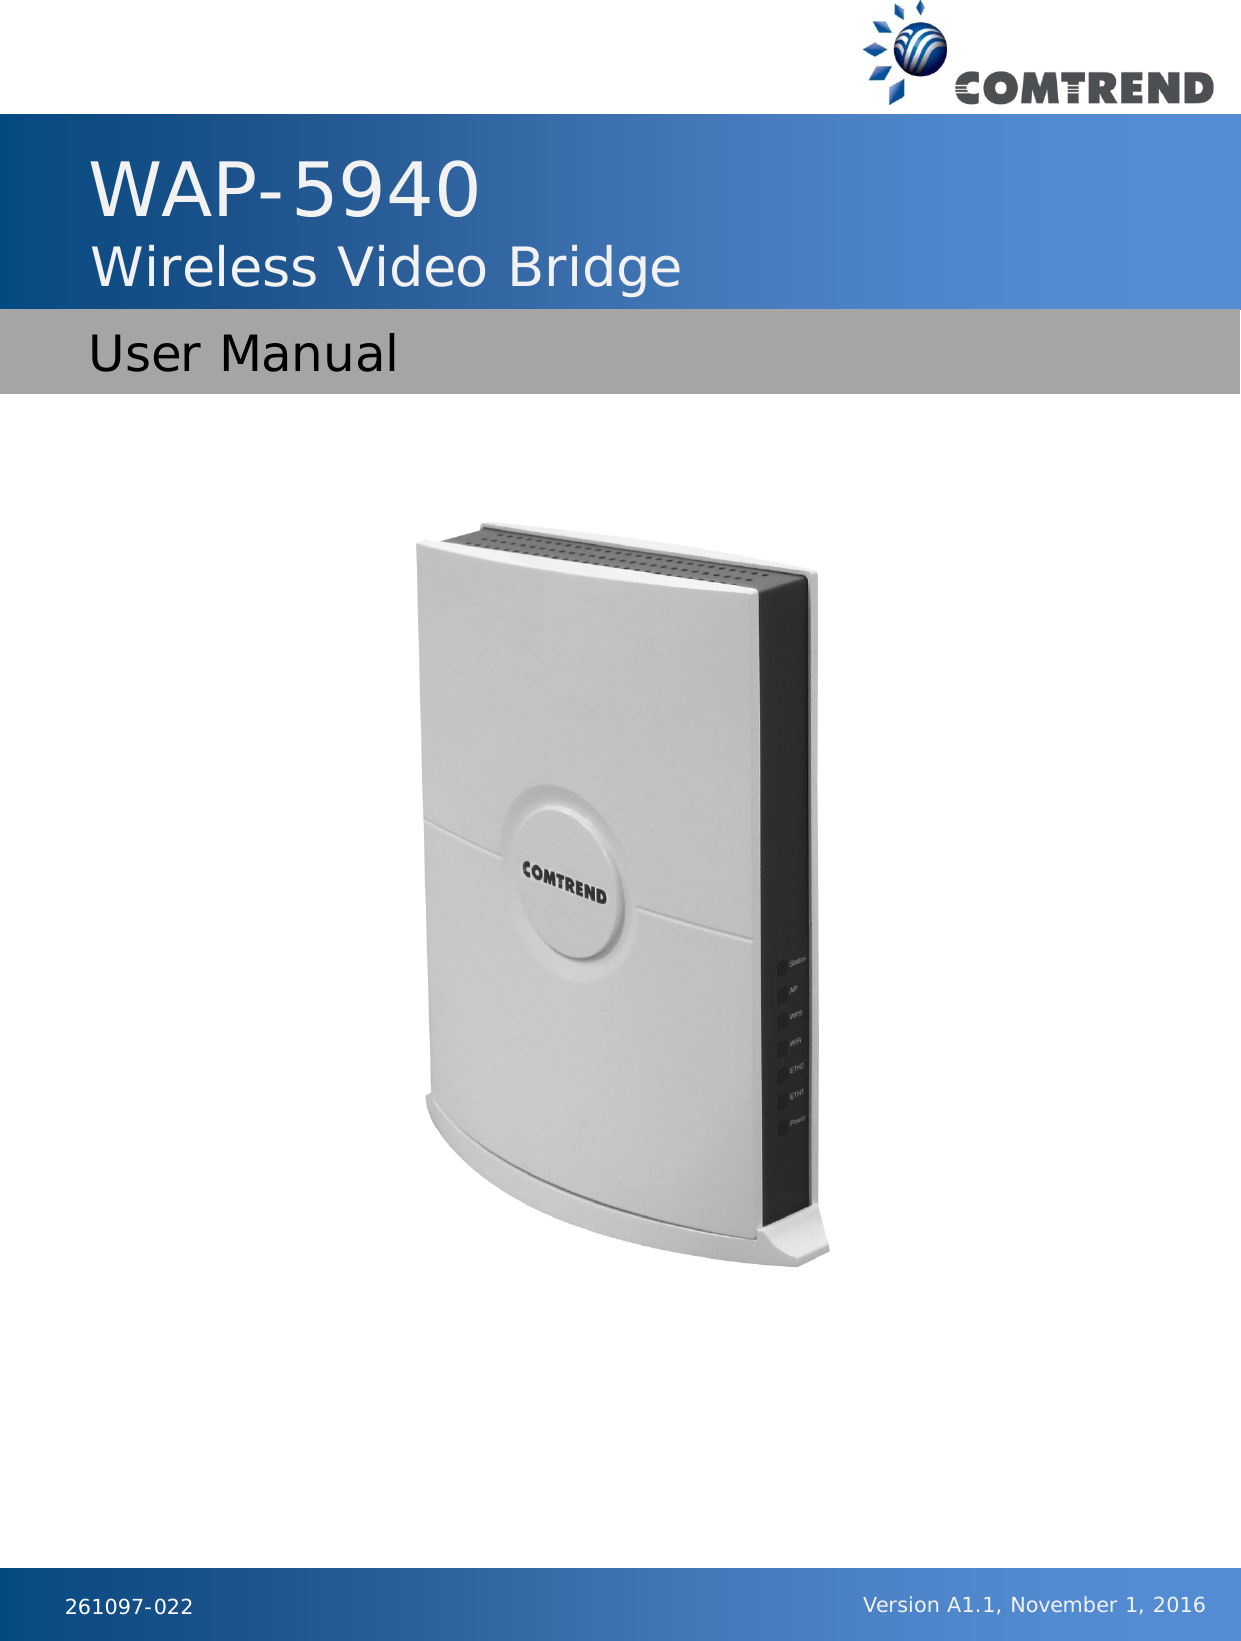   261097-022                WAP-5940 Wireless Video Bridge User Manual  Version A1.1, November 1, 2016 